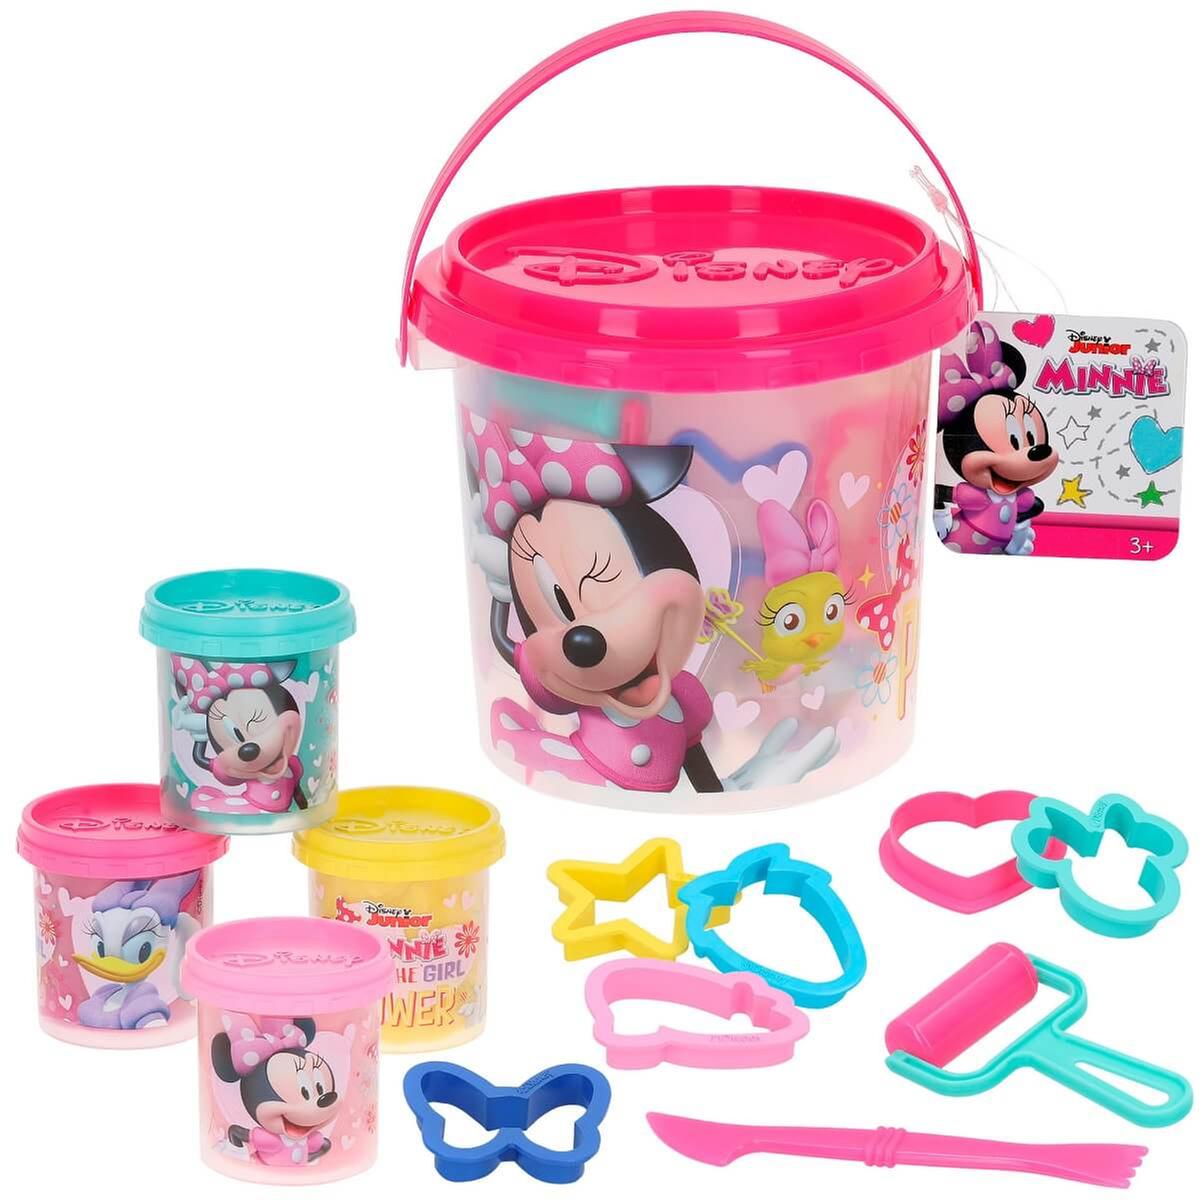 Minnie Mouse - Cubo de plastilina | Dough Licencia | Toys"R"Us España